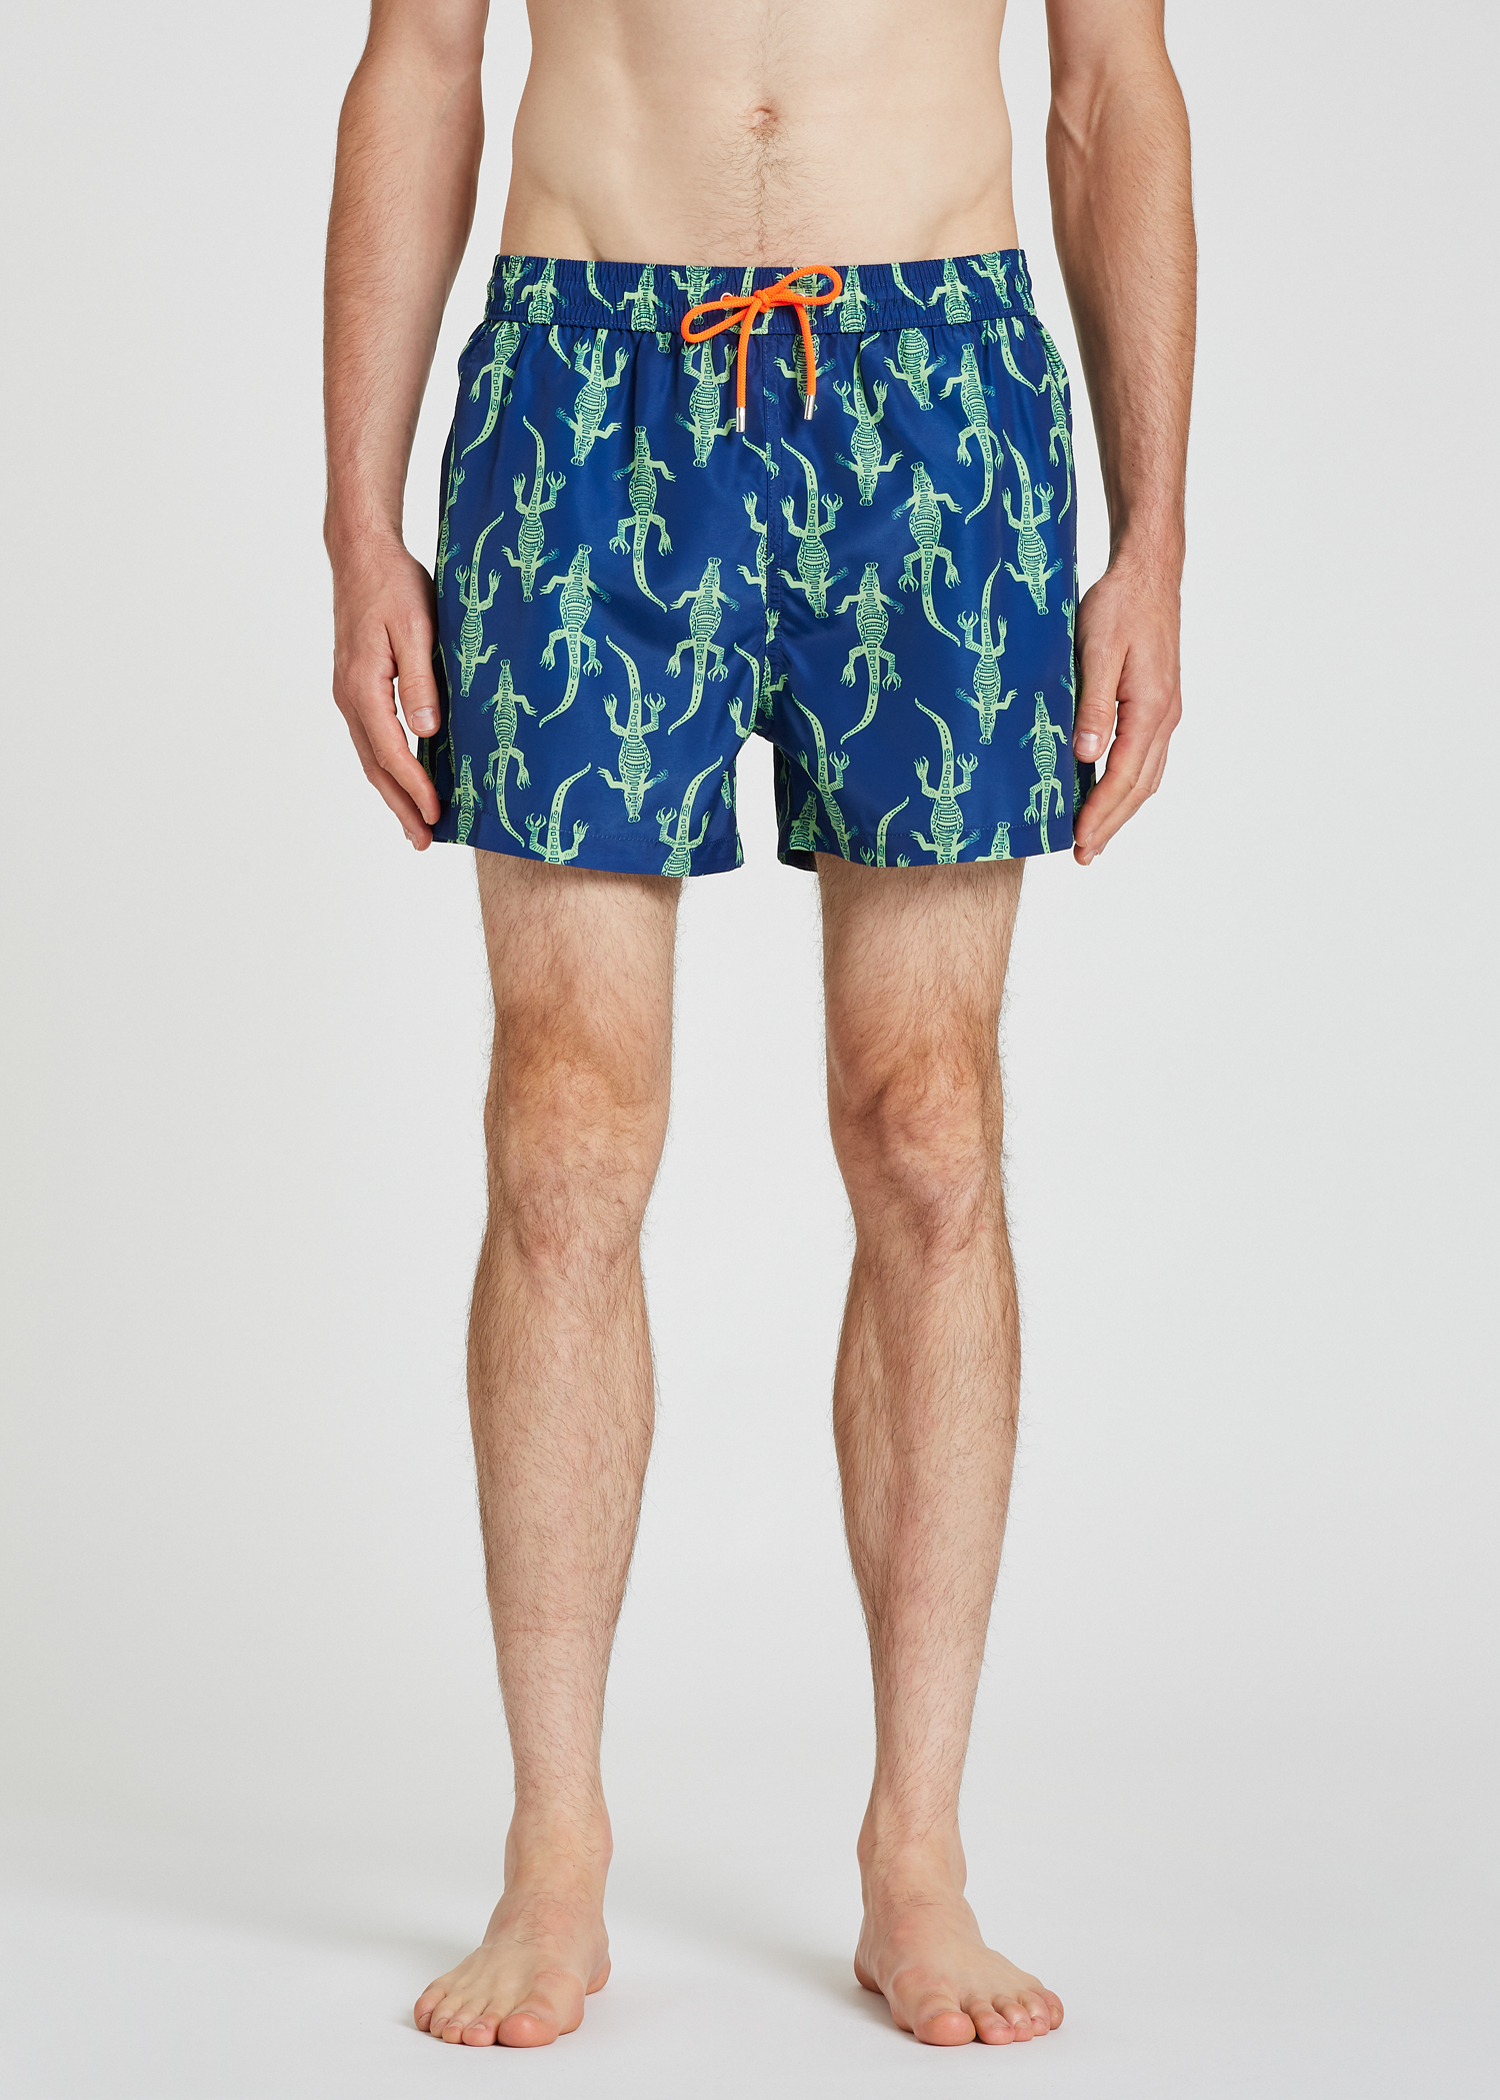 Men's Swimwear | Designer Swim Shorts & Beach Shorts